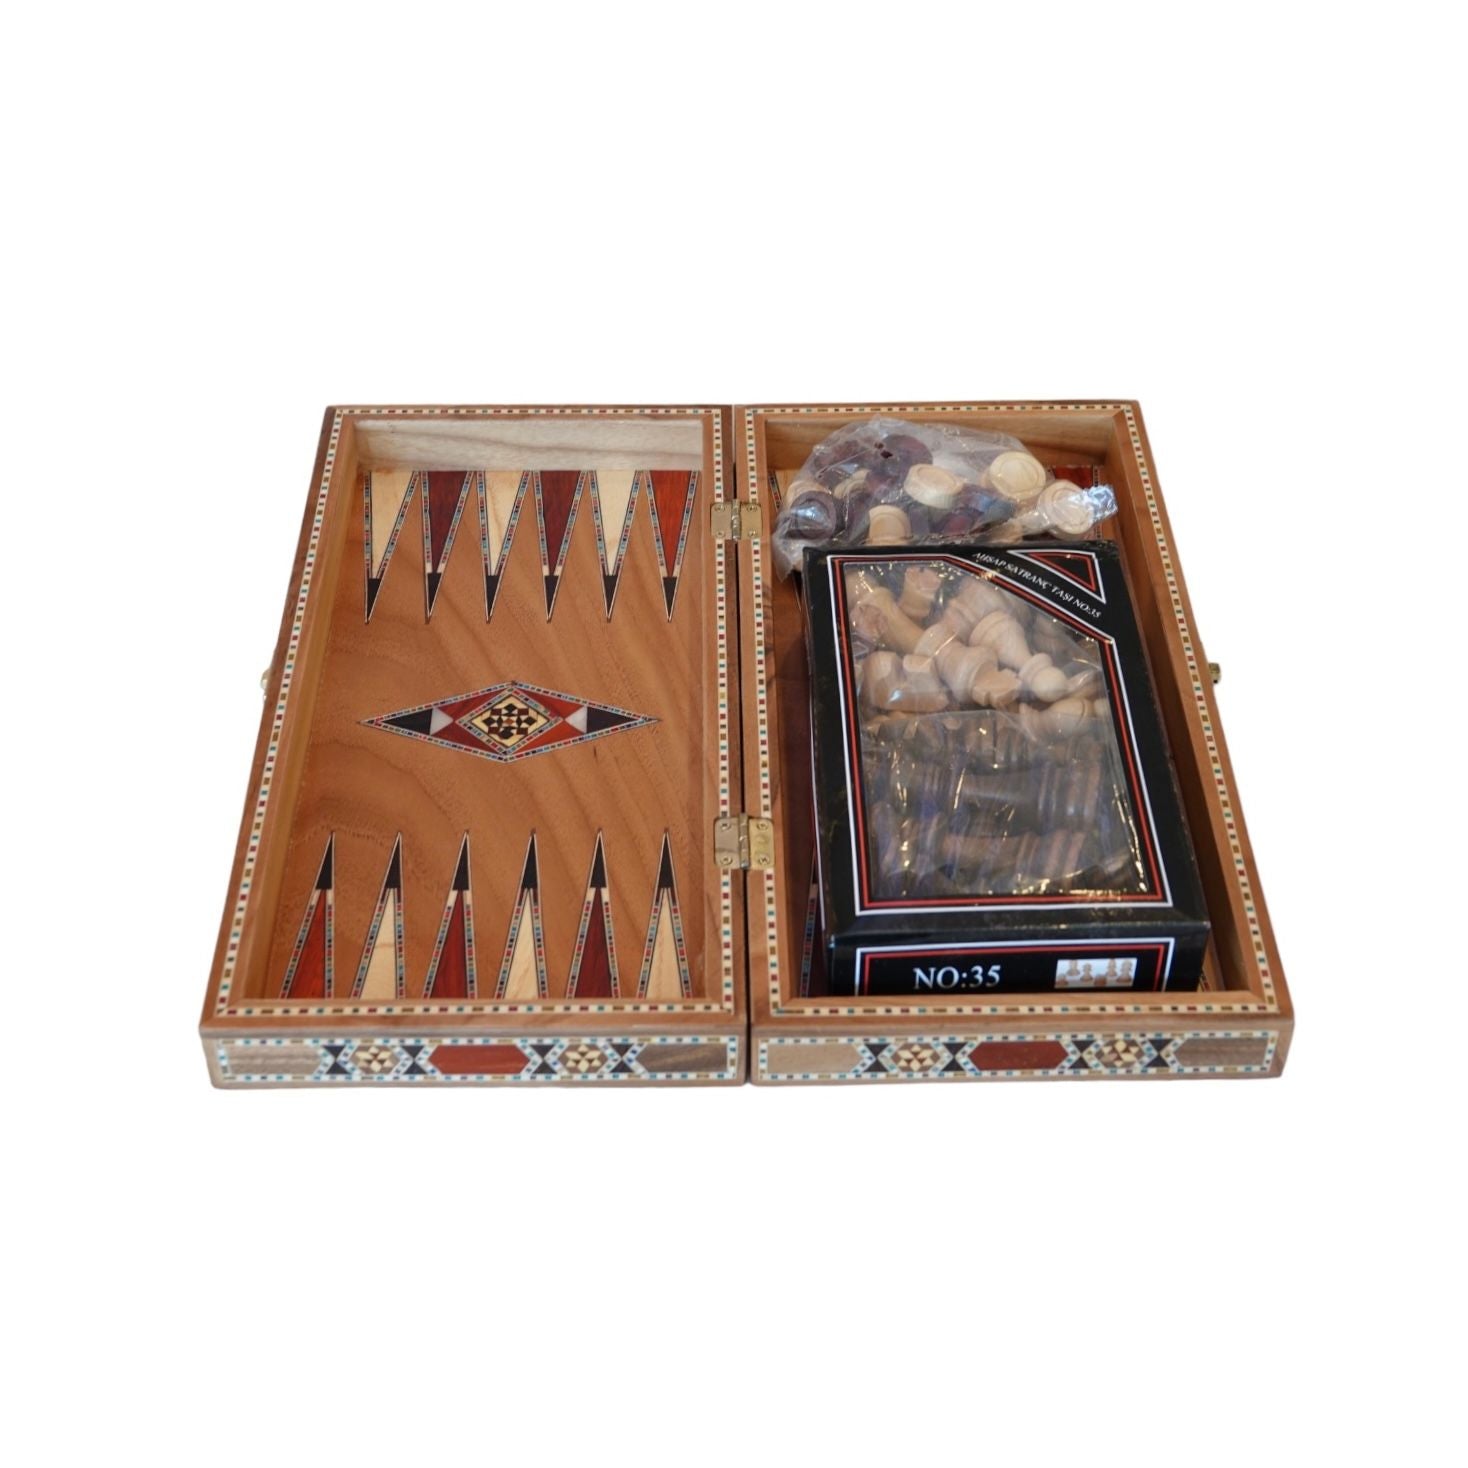 Woodart Chess & Backgammon Set (34 x 34cm)